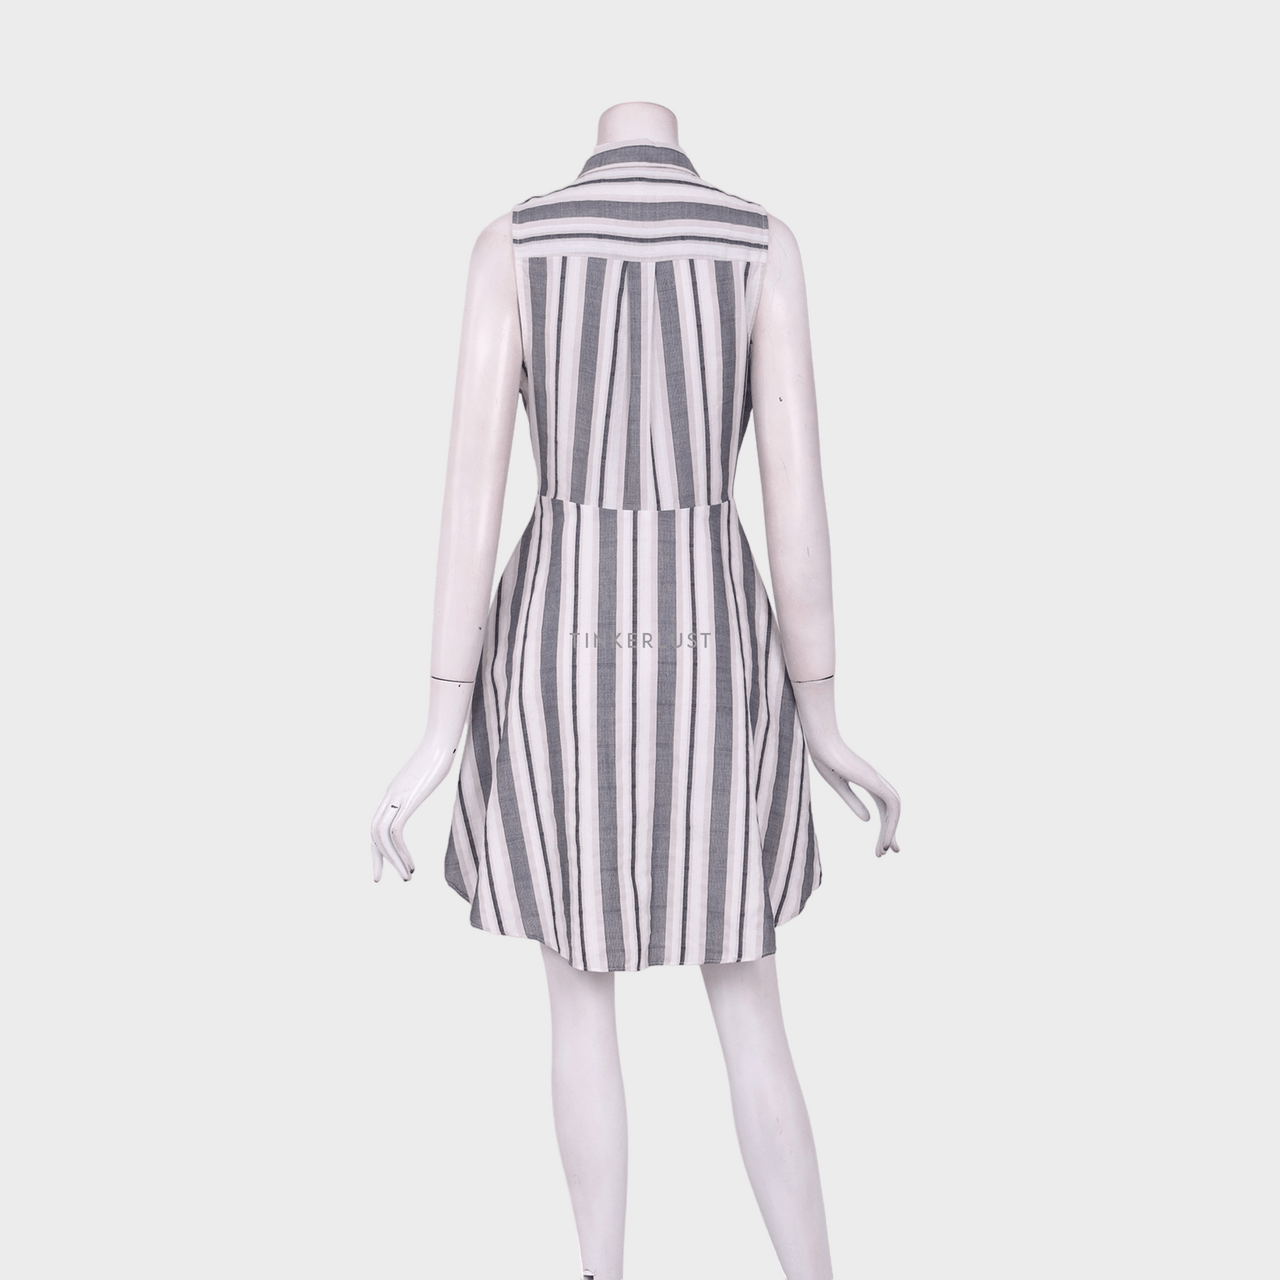 Bbcg Generation Striped Grey/White Shirt Dress 